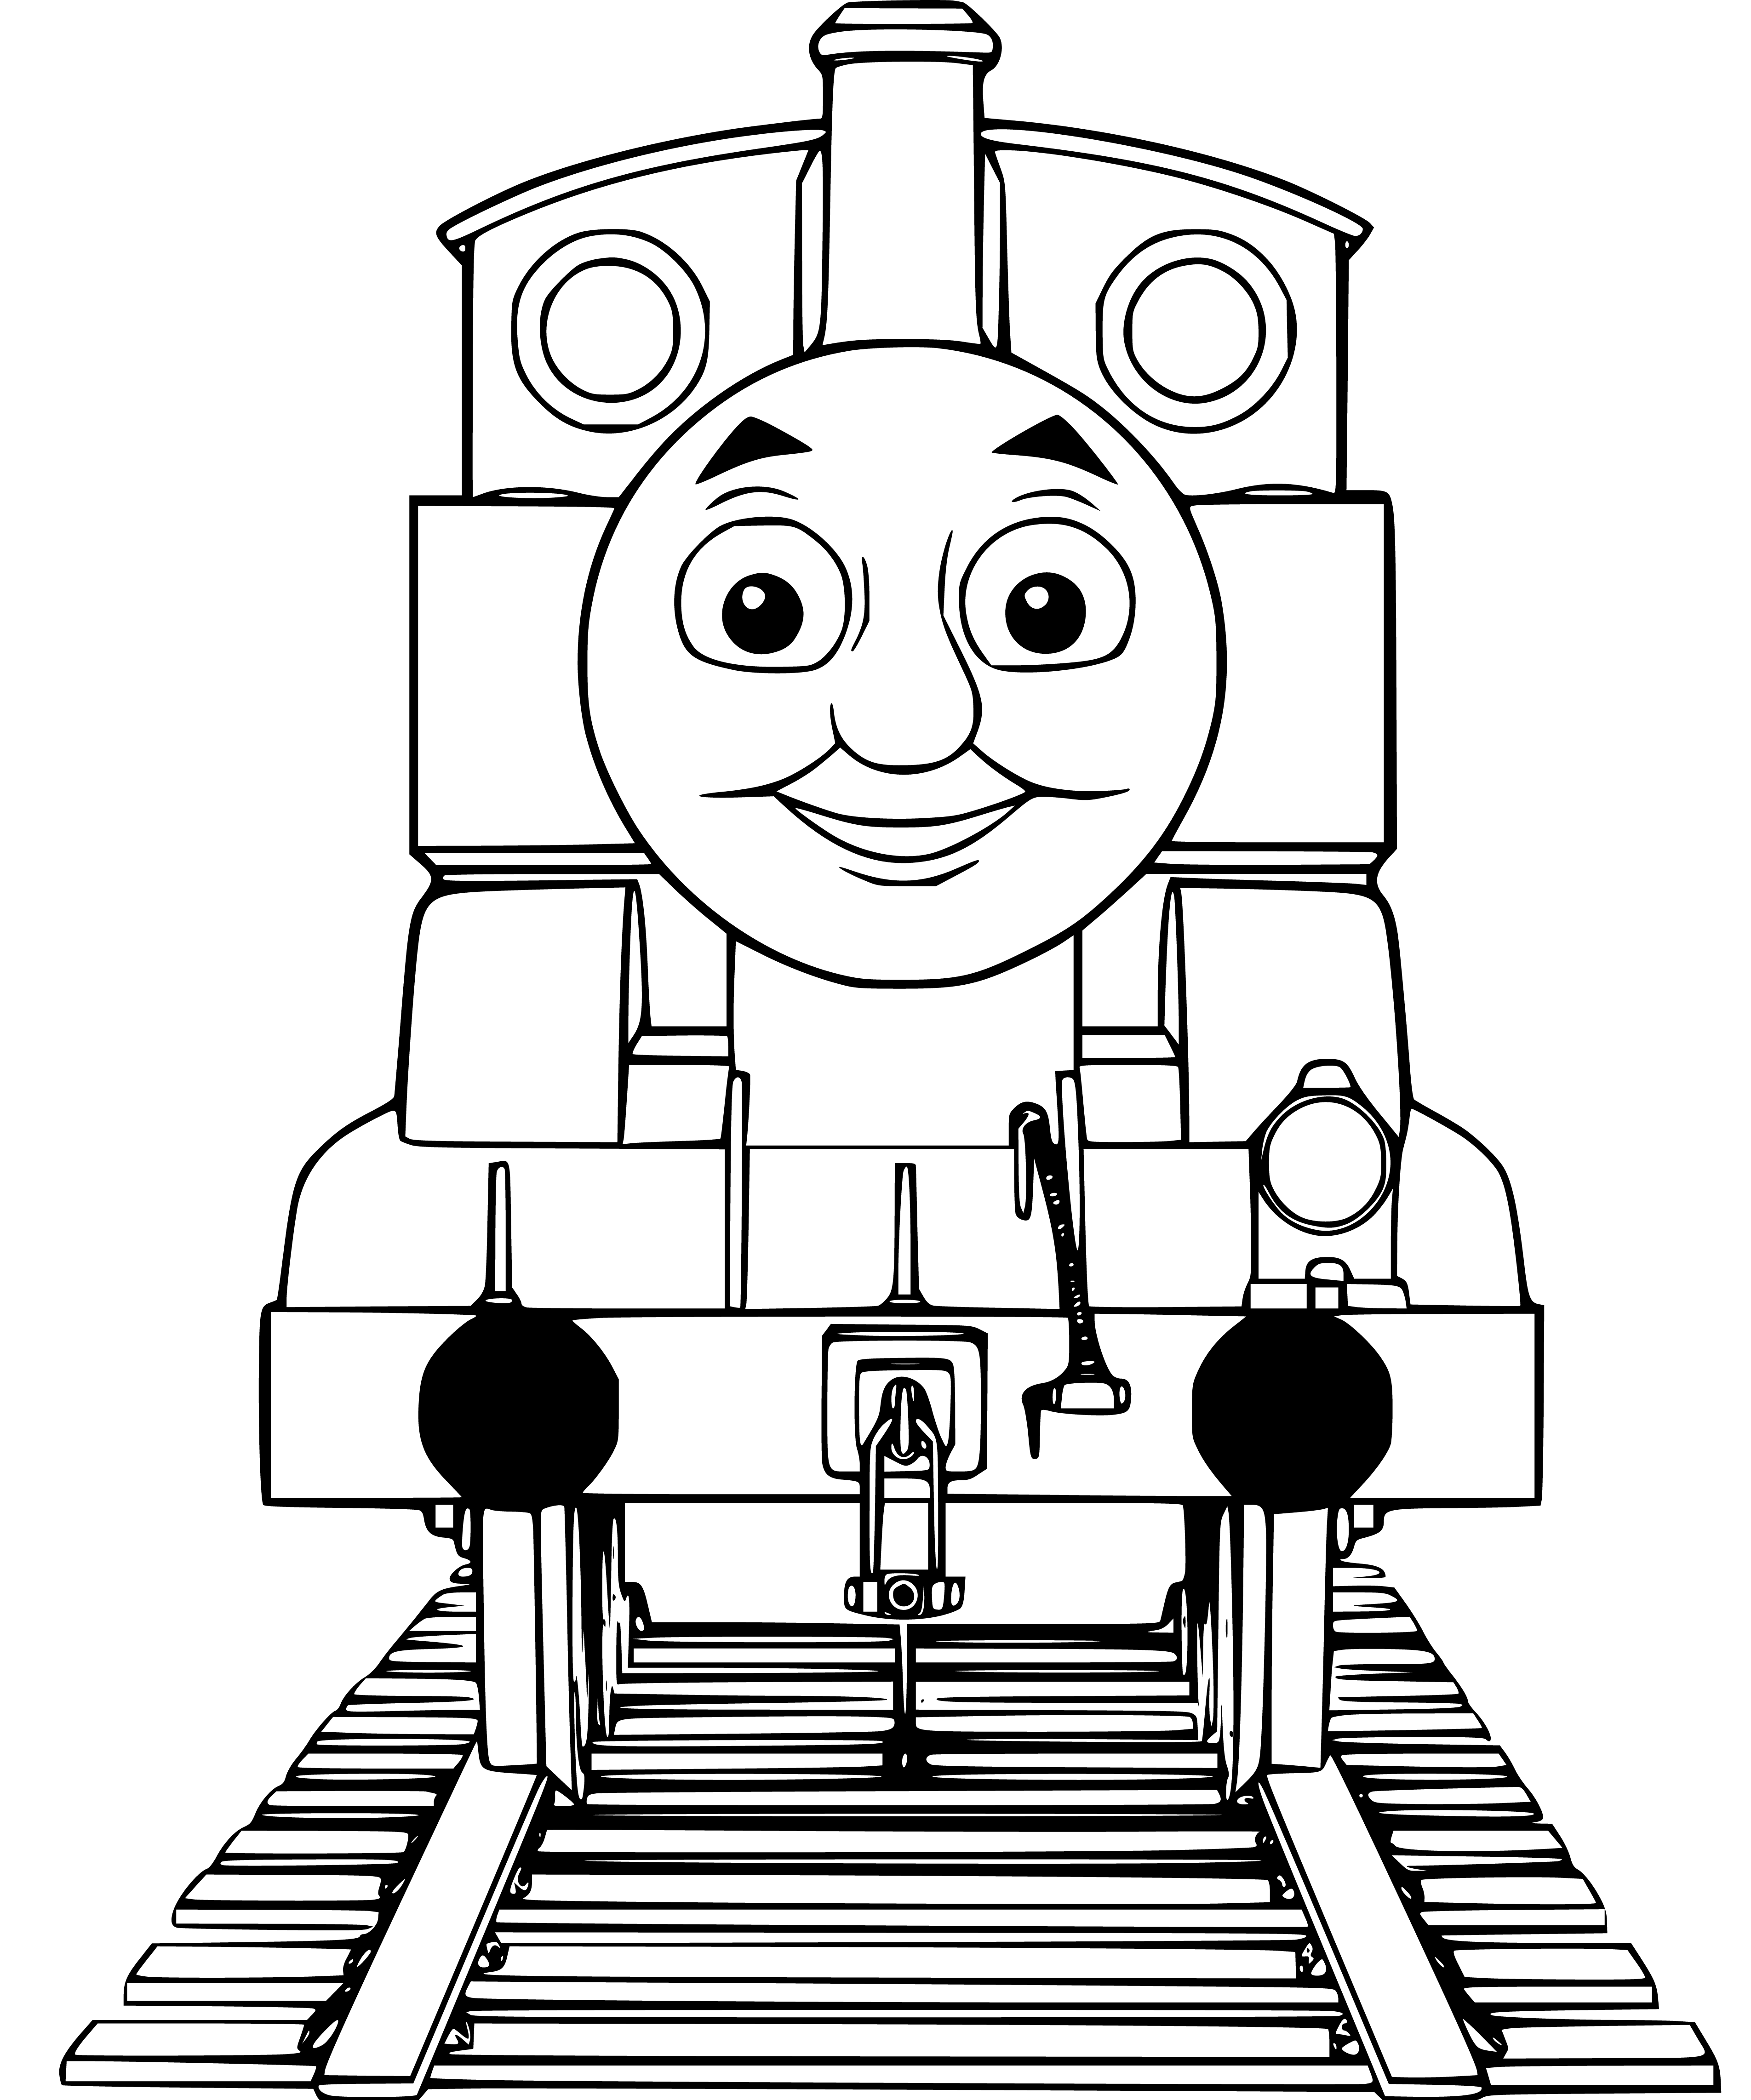 Thomas the Engine Tank Coloring Page - SheetalColor.com